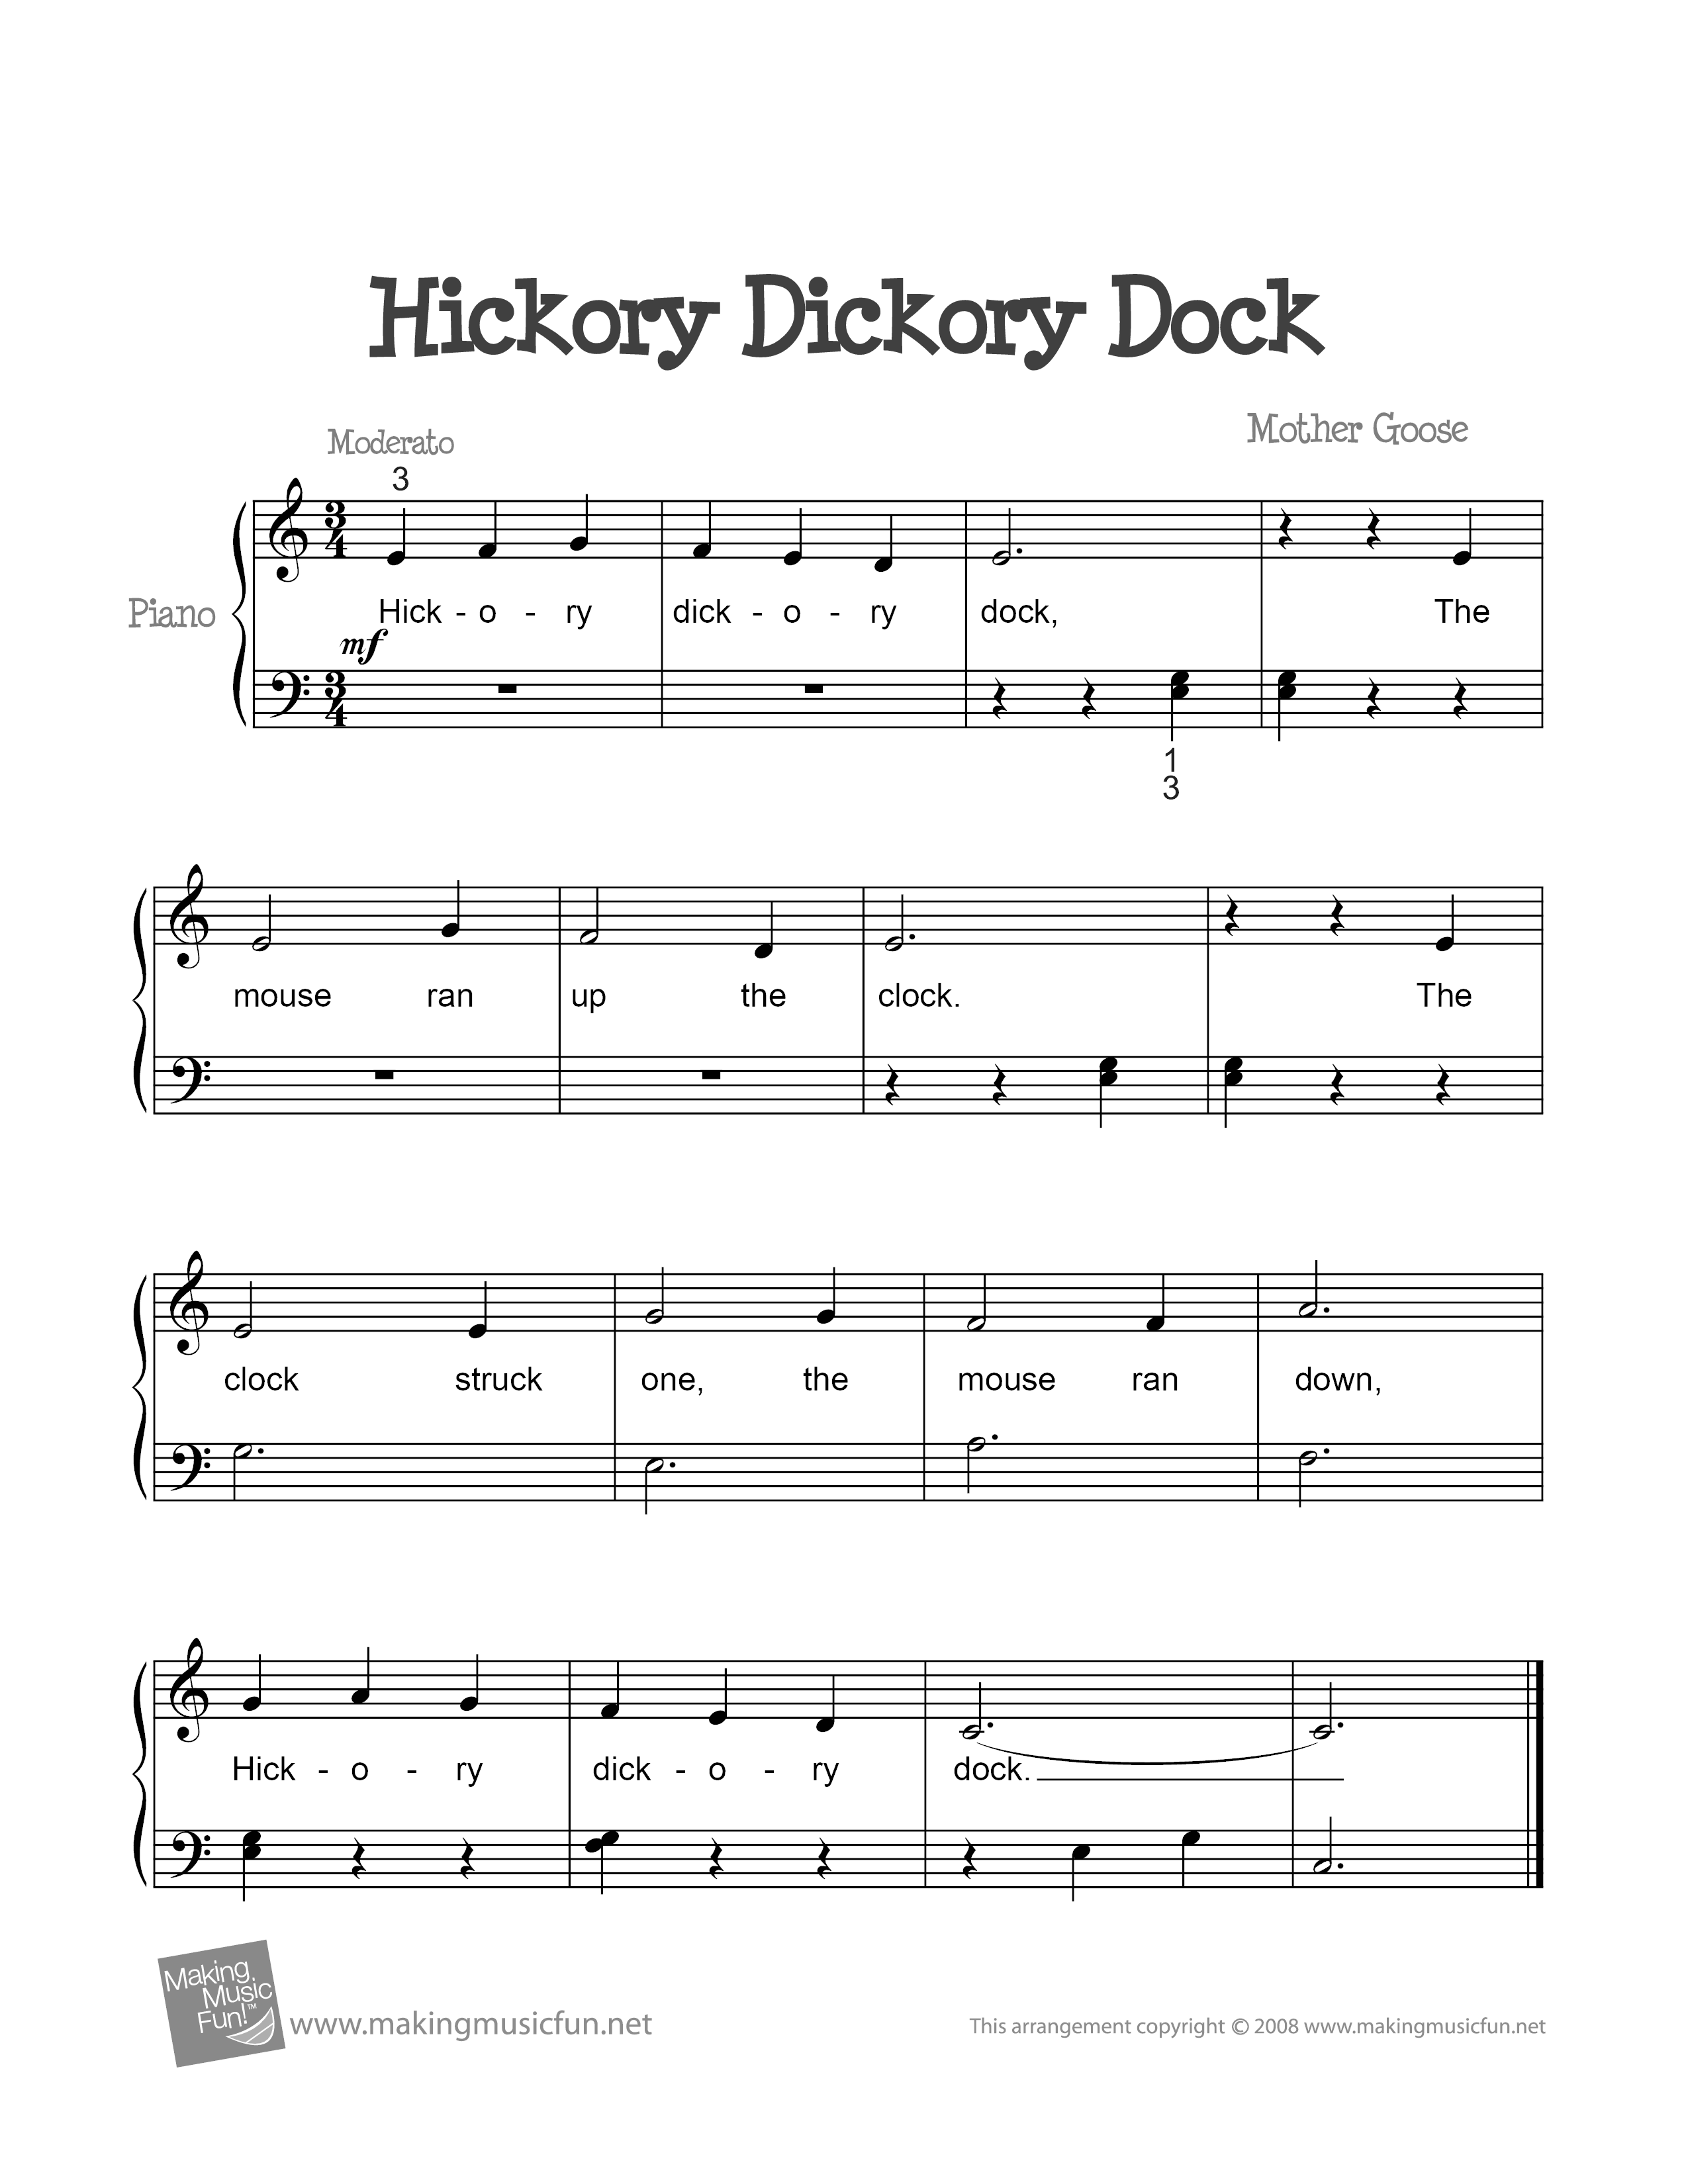 Hickory Dickory Dock Score